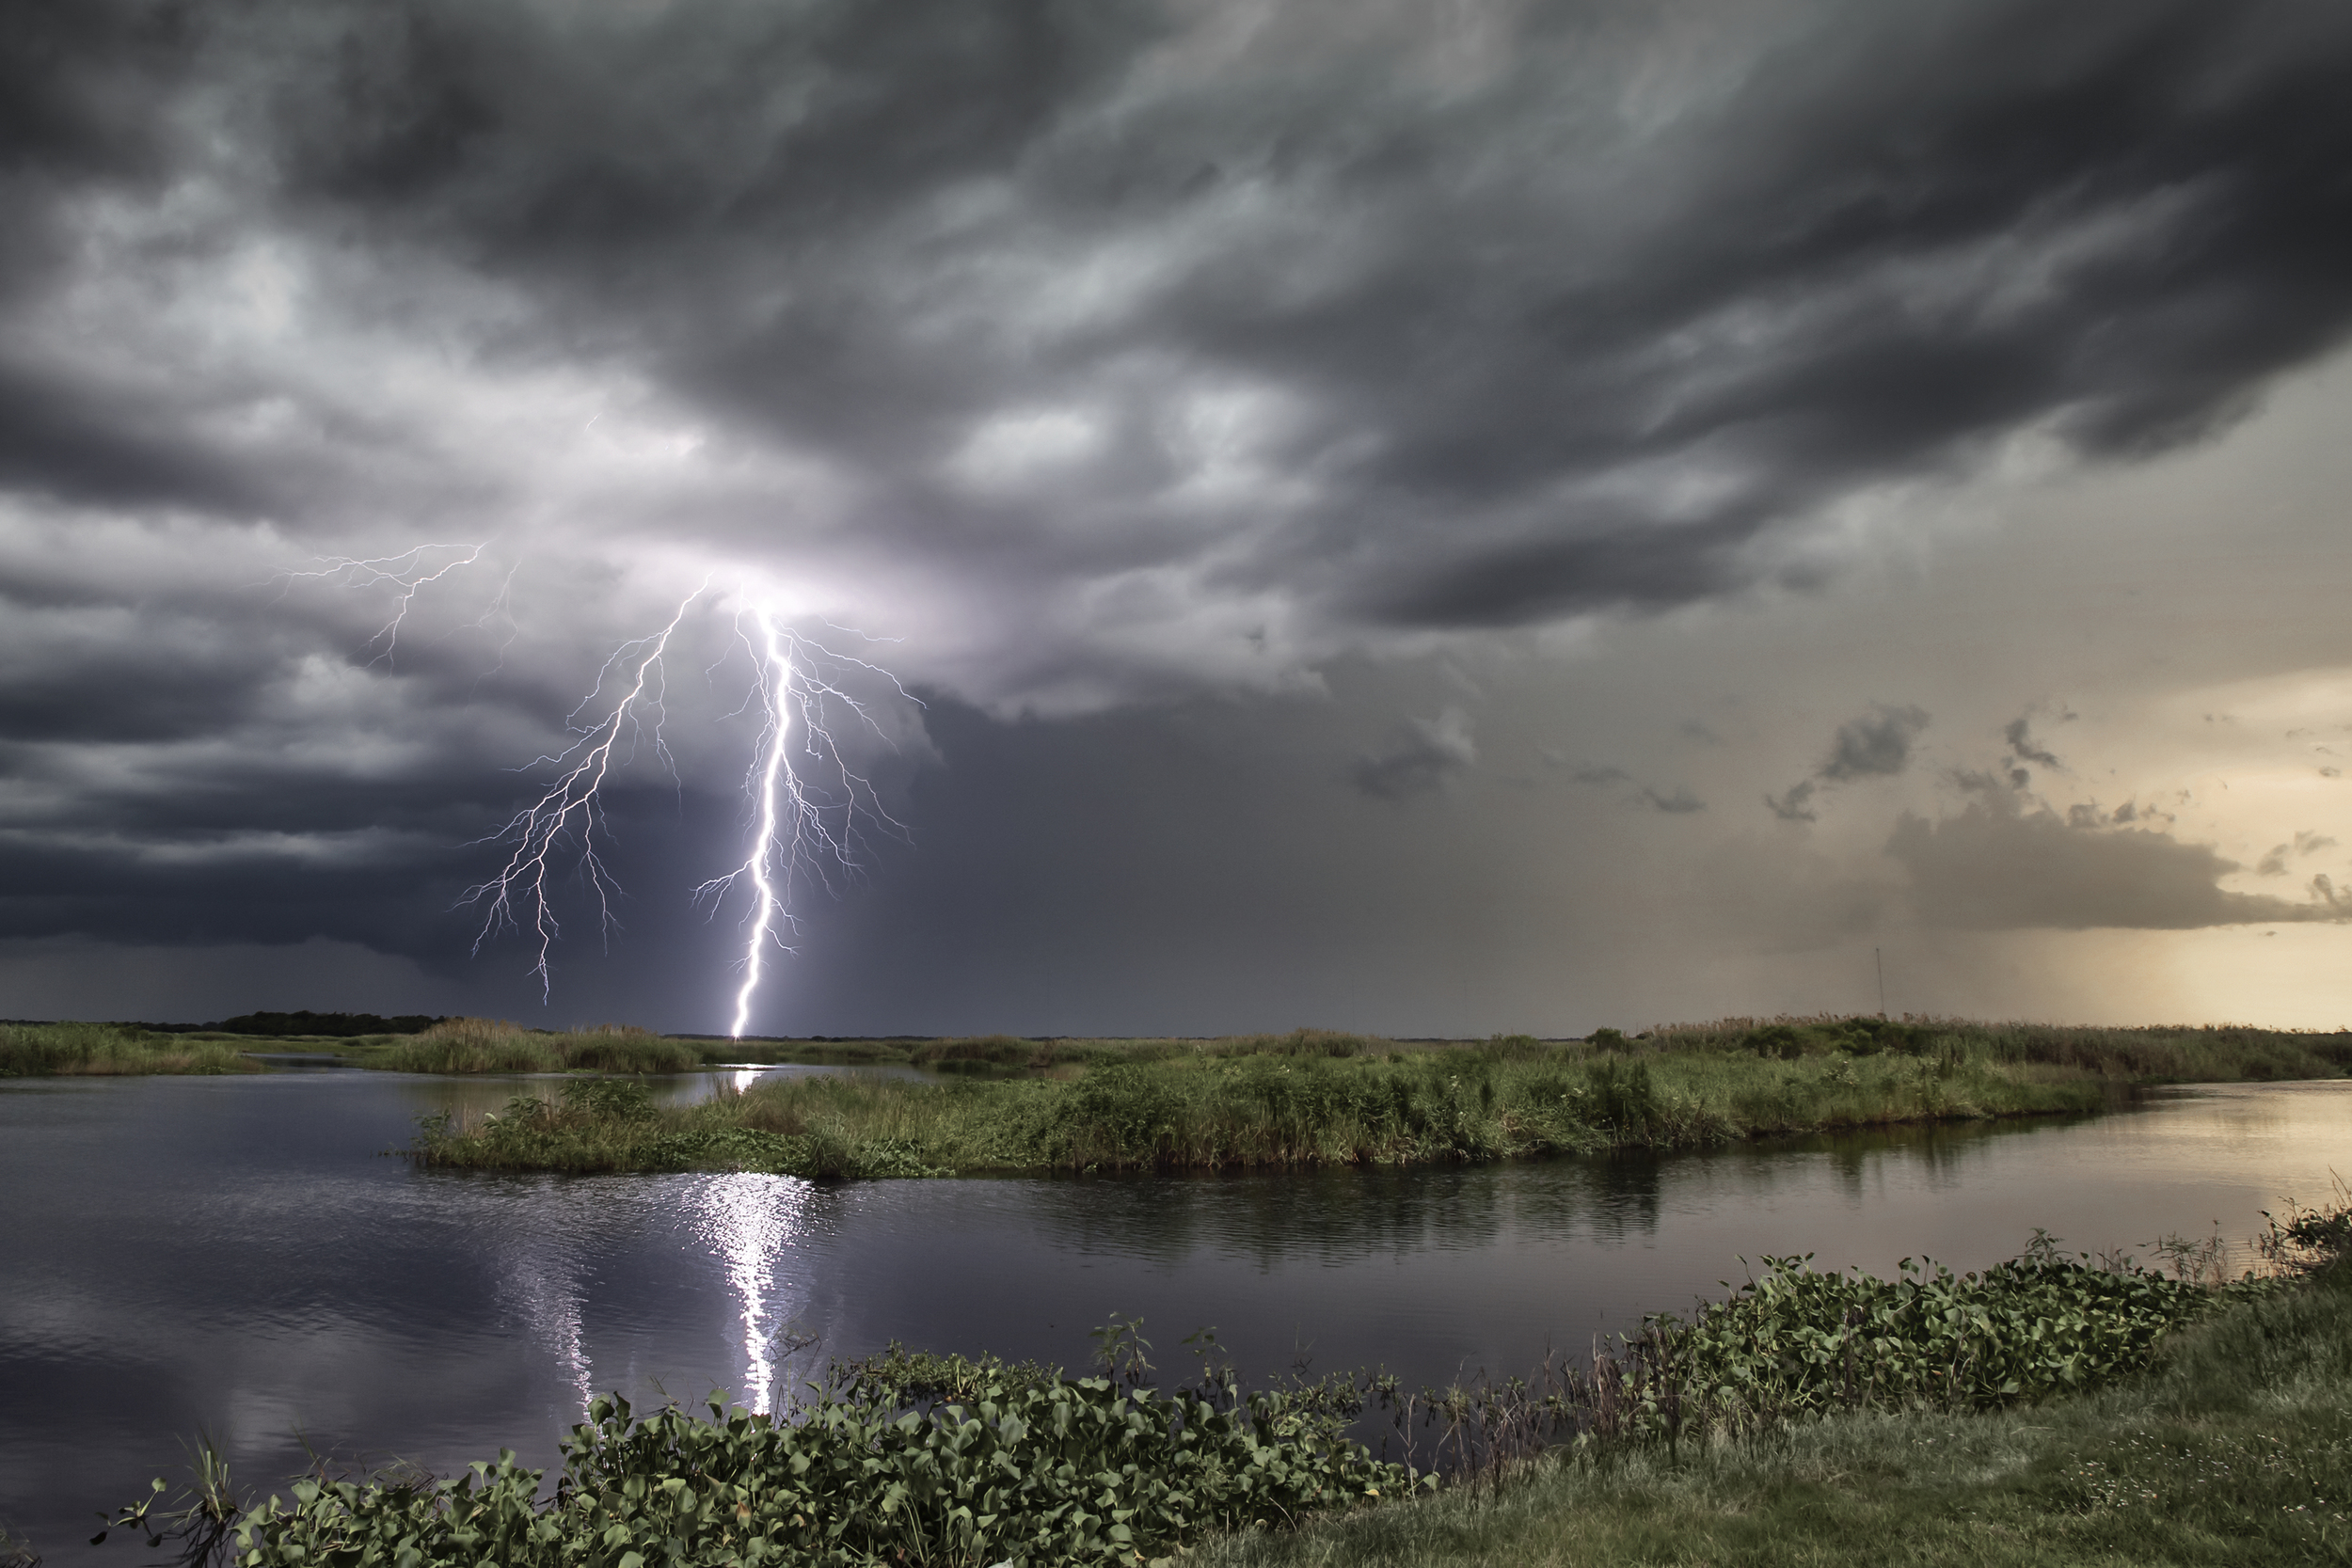  Cloud to ground lightning near Christmas, Florida&nbsp; 